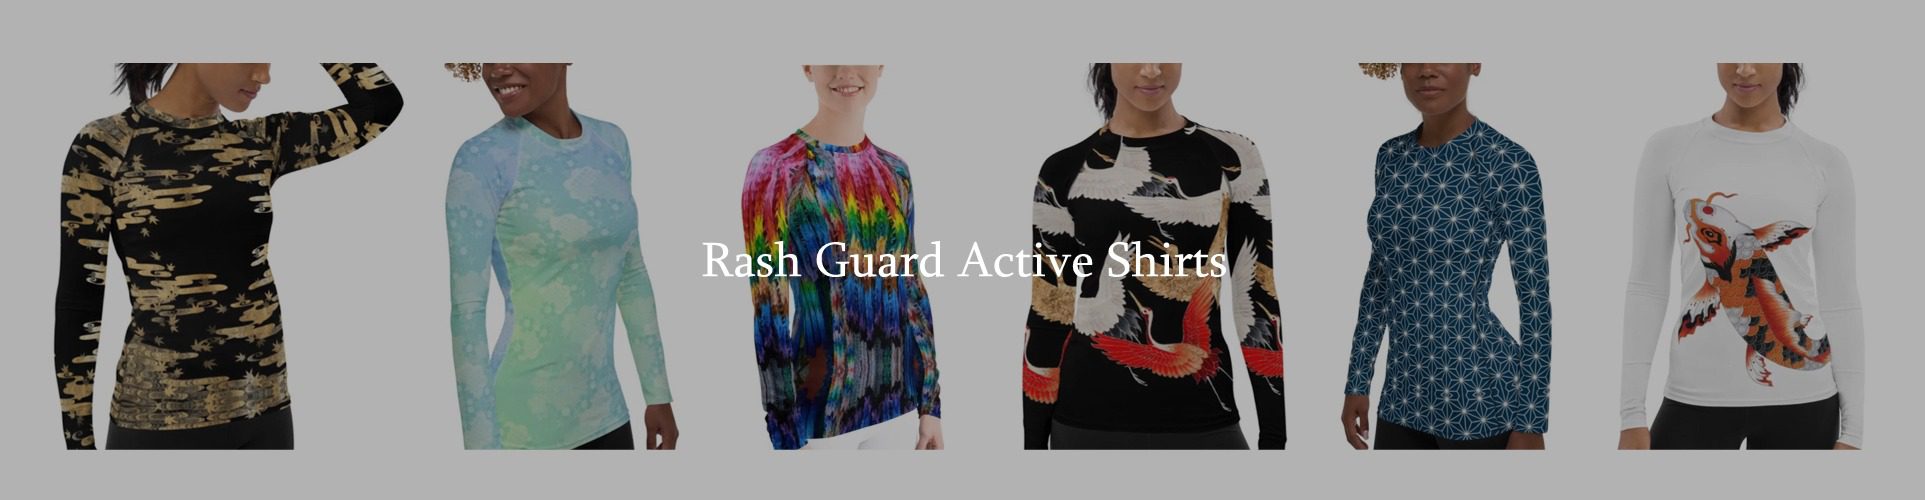 Rash Guard Active Shirts